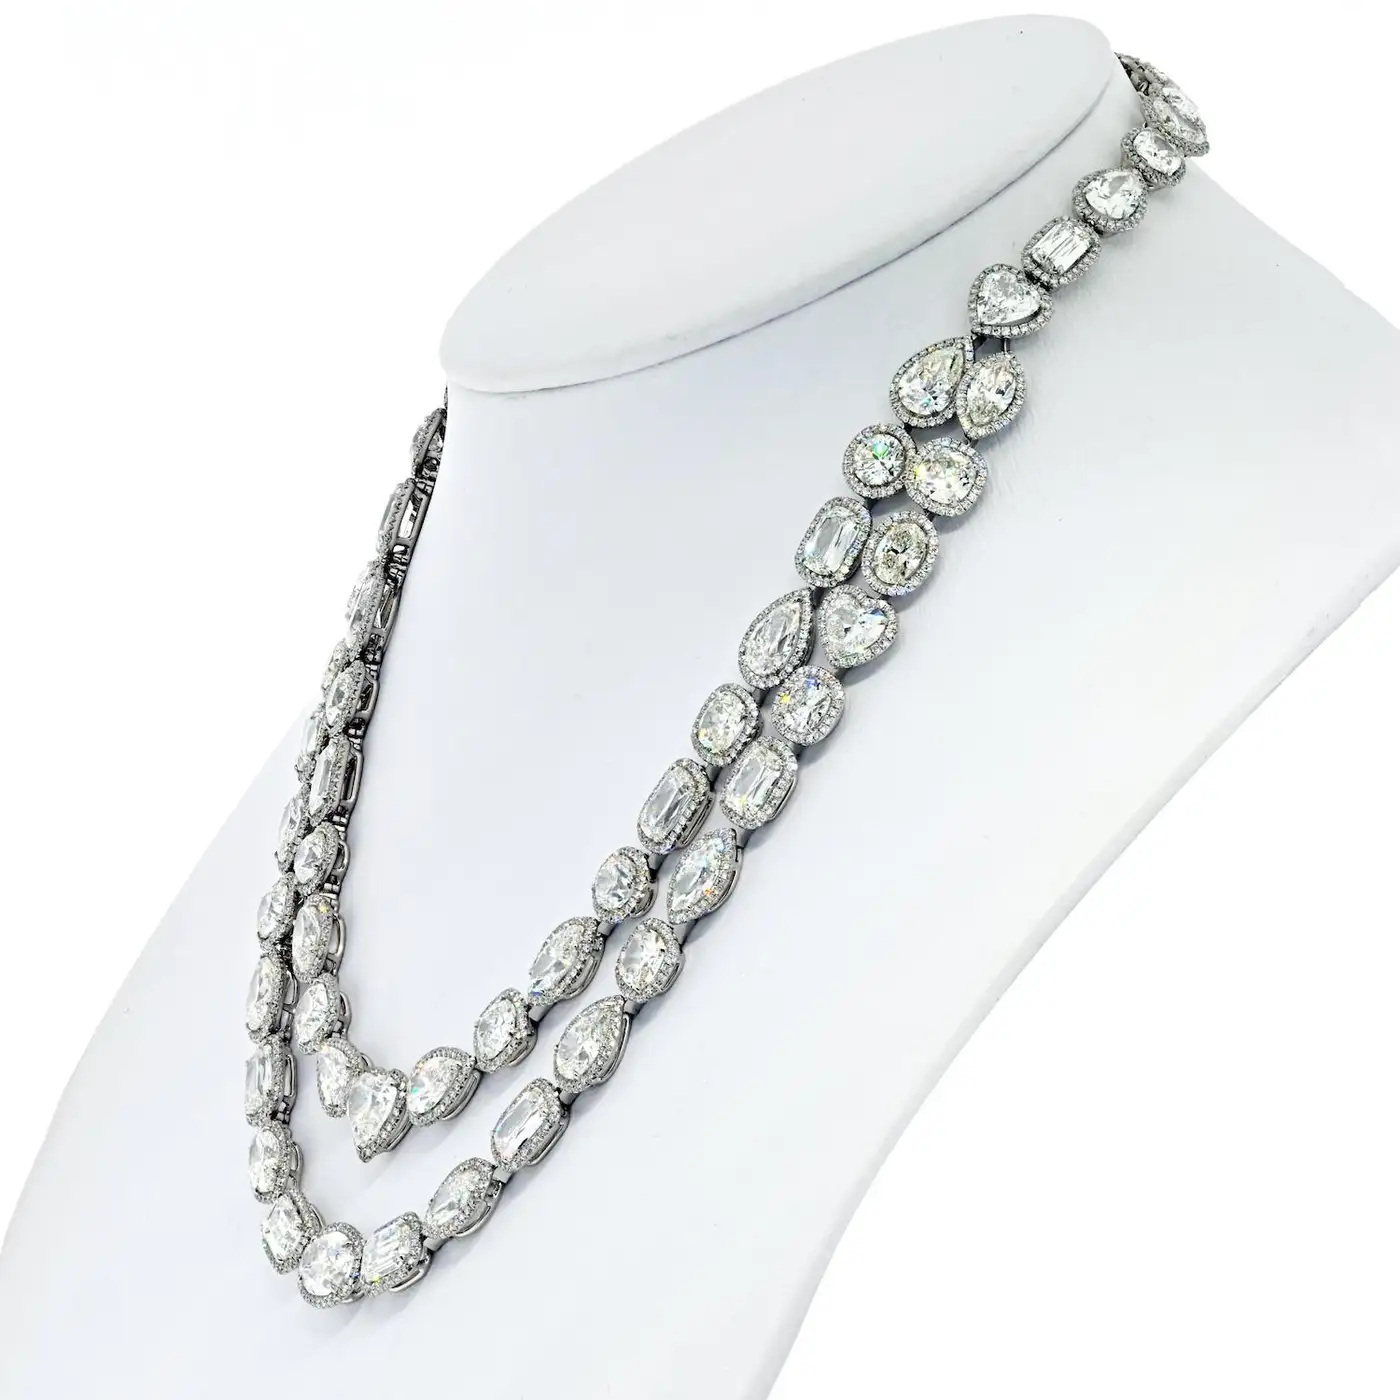 William-Goldberg-63-Carat-Spectacular-Diamond-Infinity-Necklace-3.webp